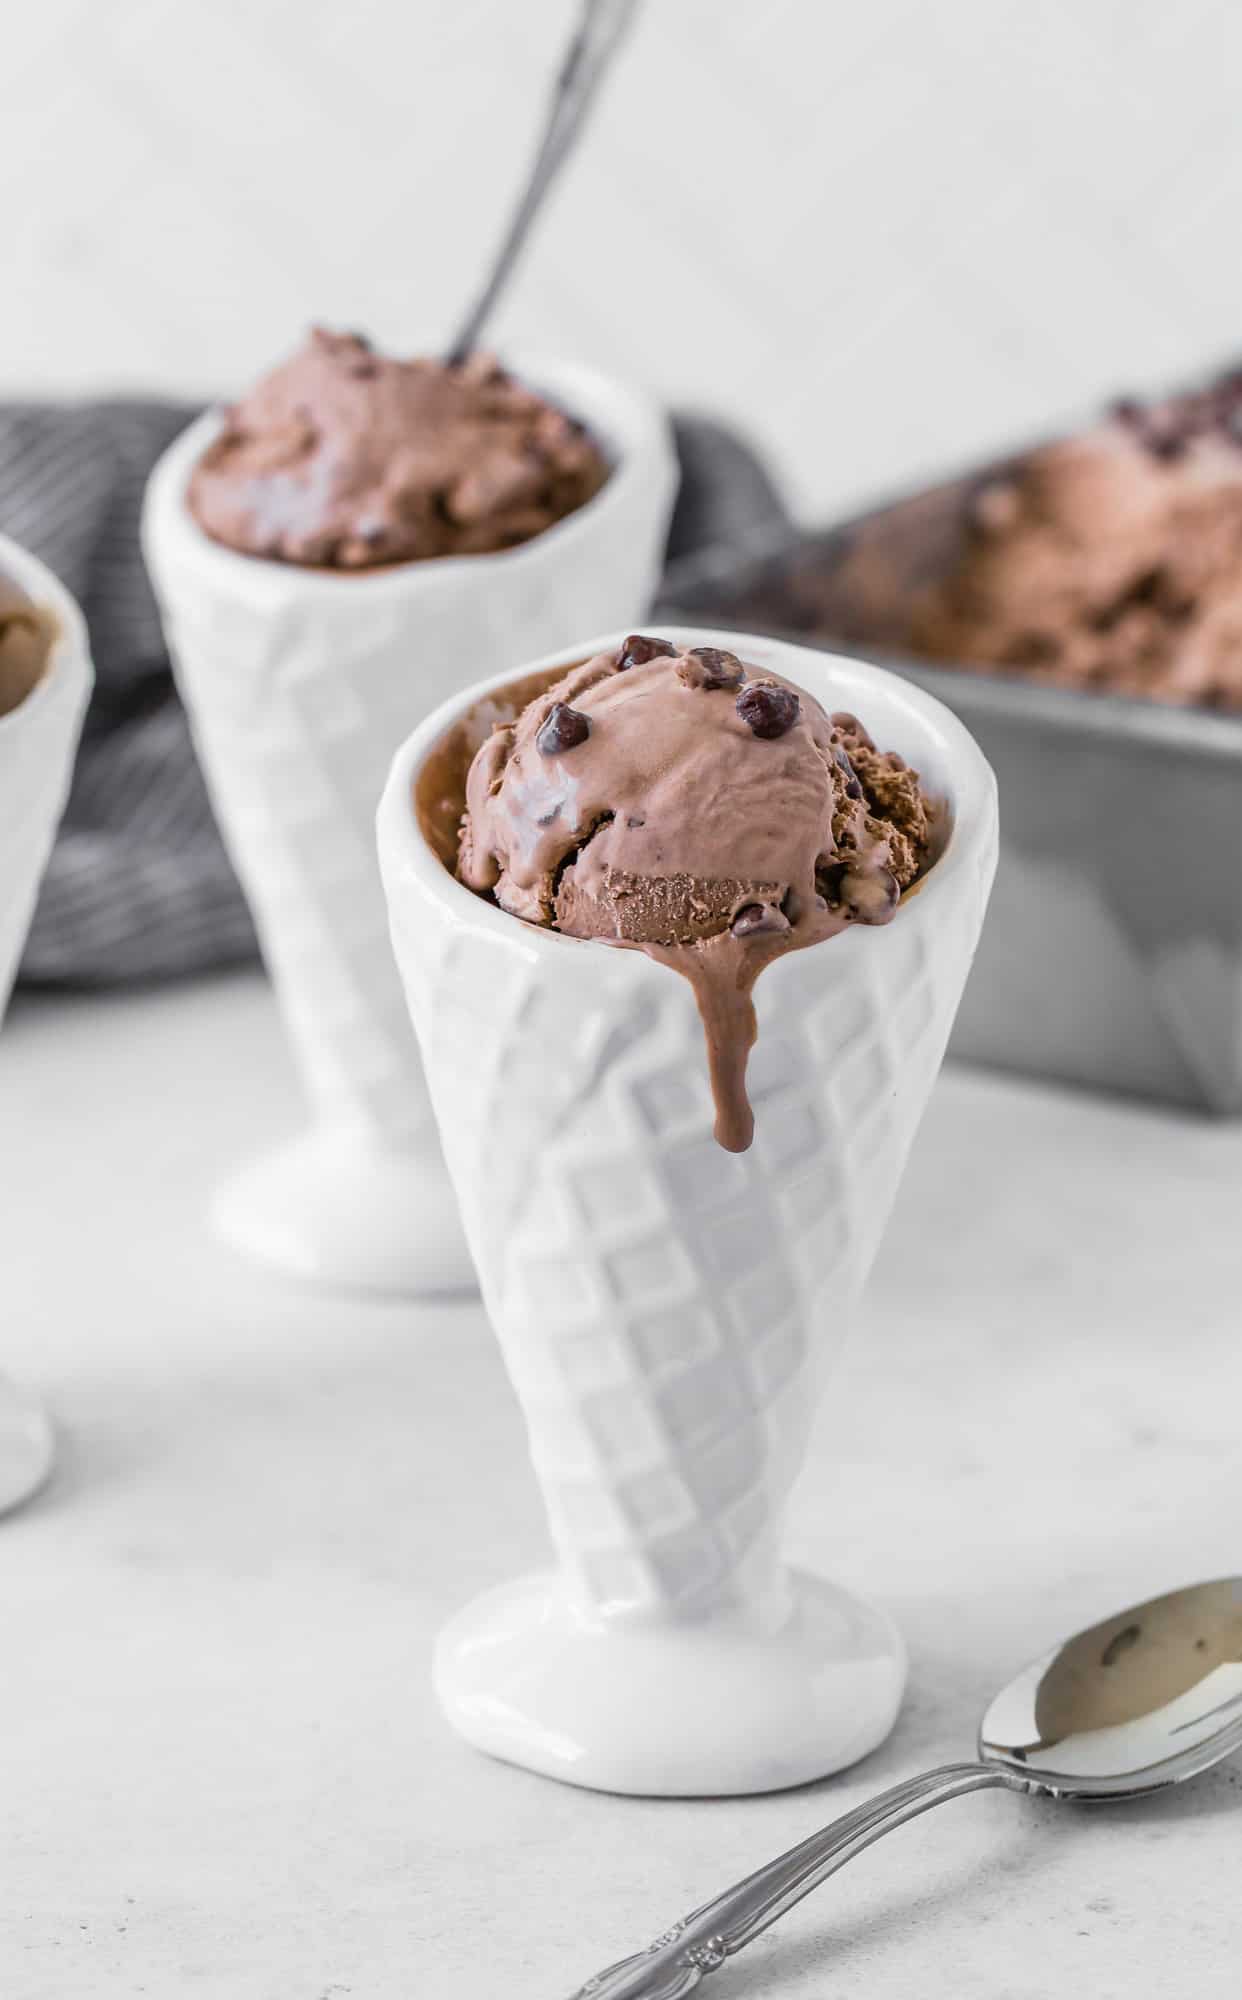 Chocolate ice cream dripping down a white ceramic cone.